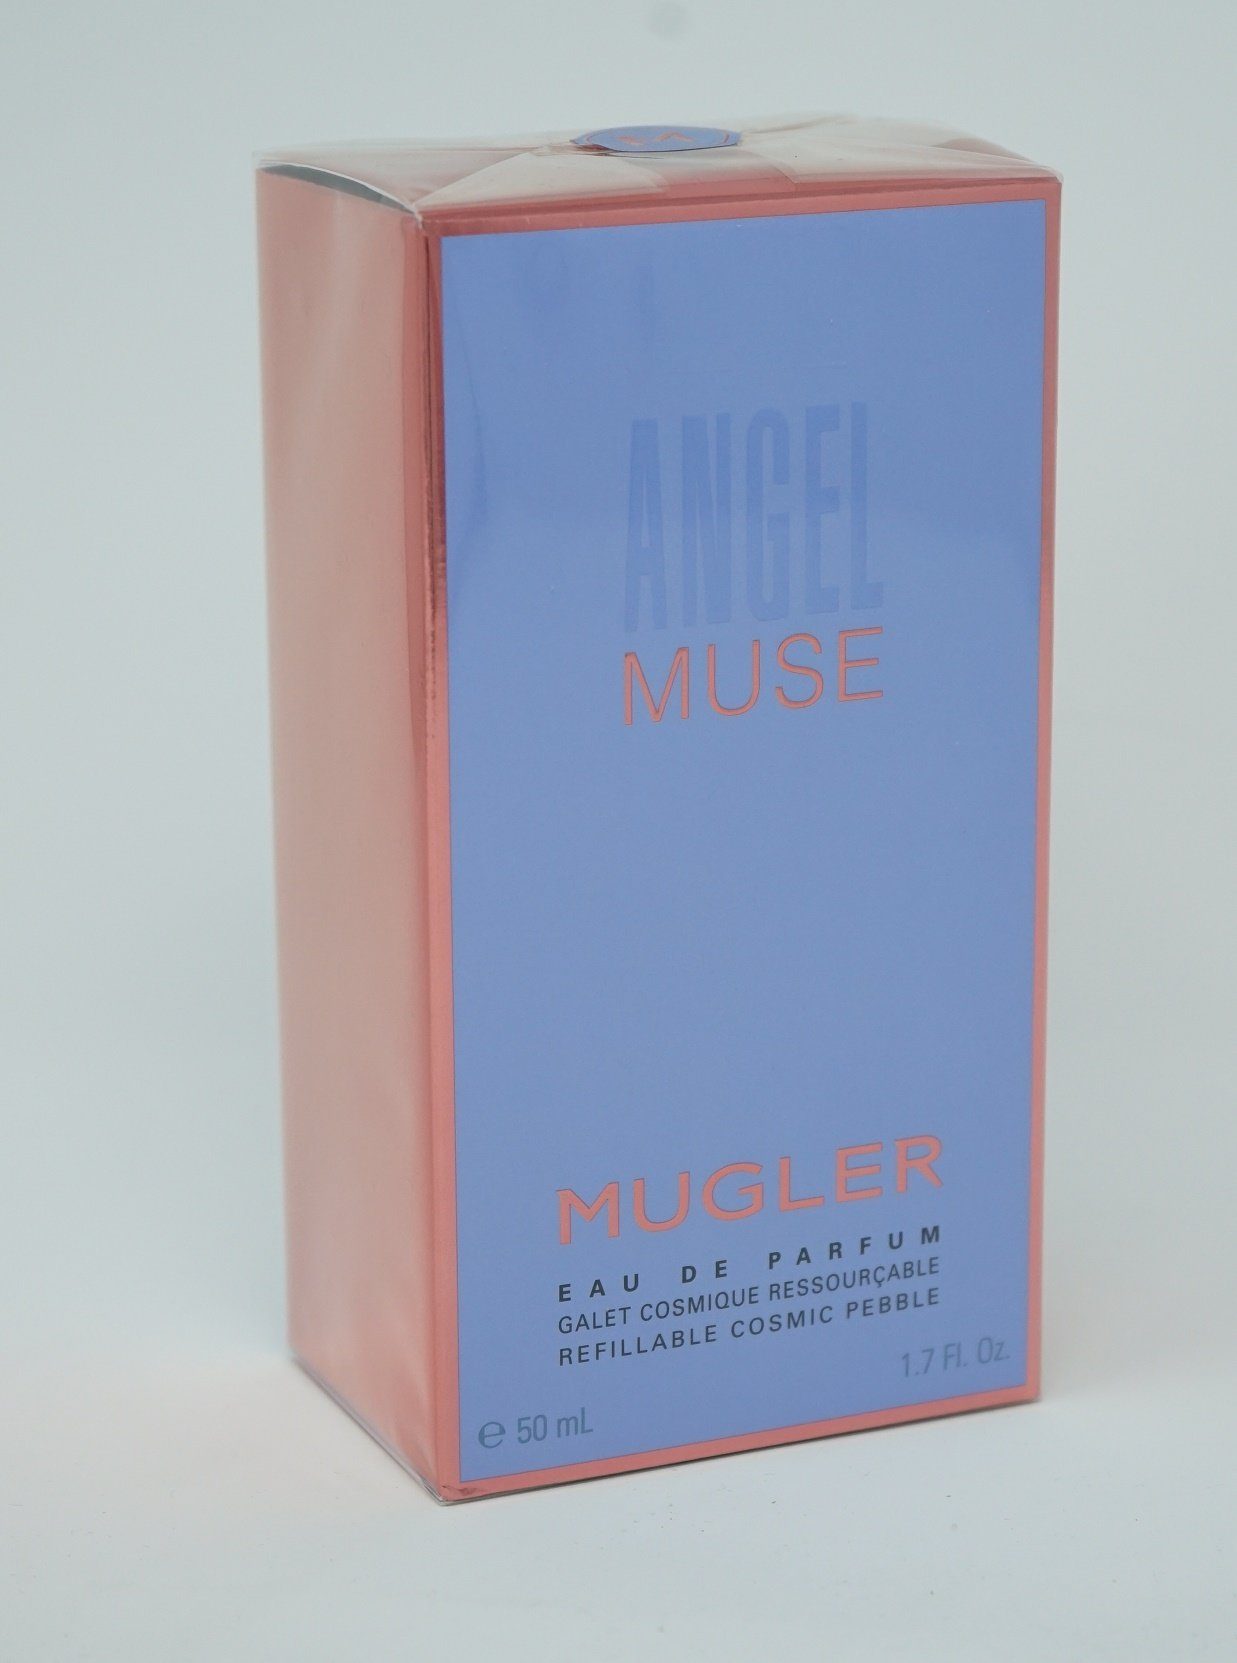 Thierry Mugler Eau de Parfum Mugler Muse Eau Refillable de Thierry 50ml Angel Parfum